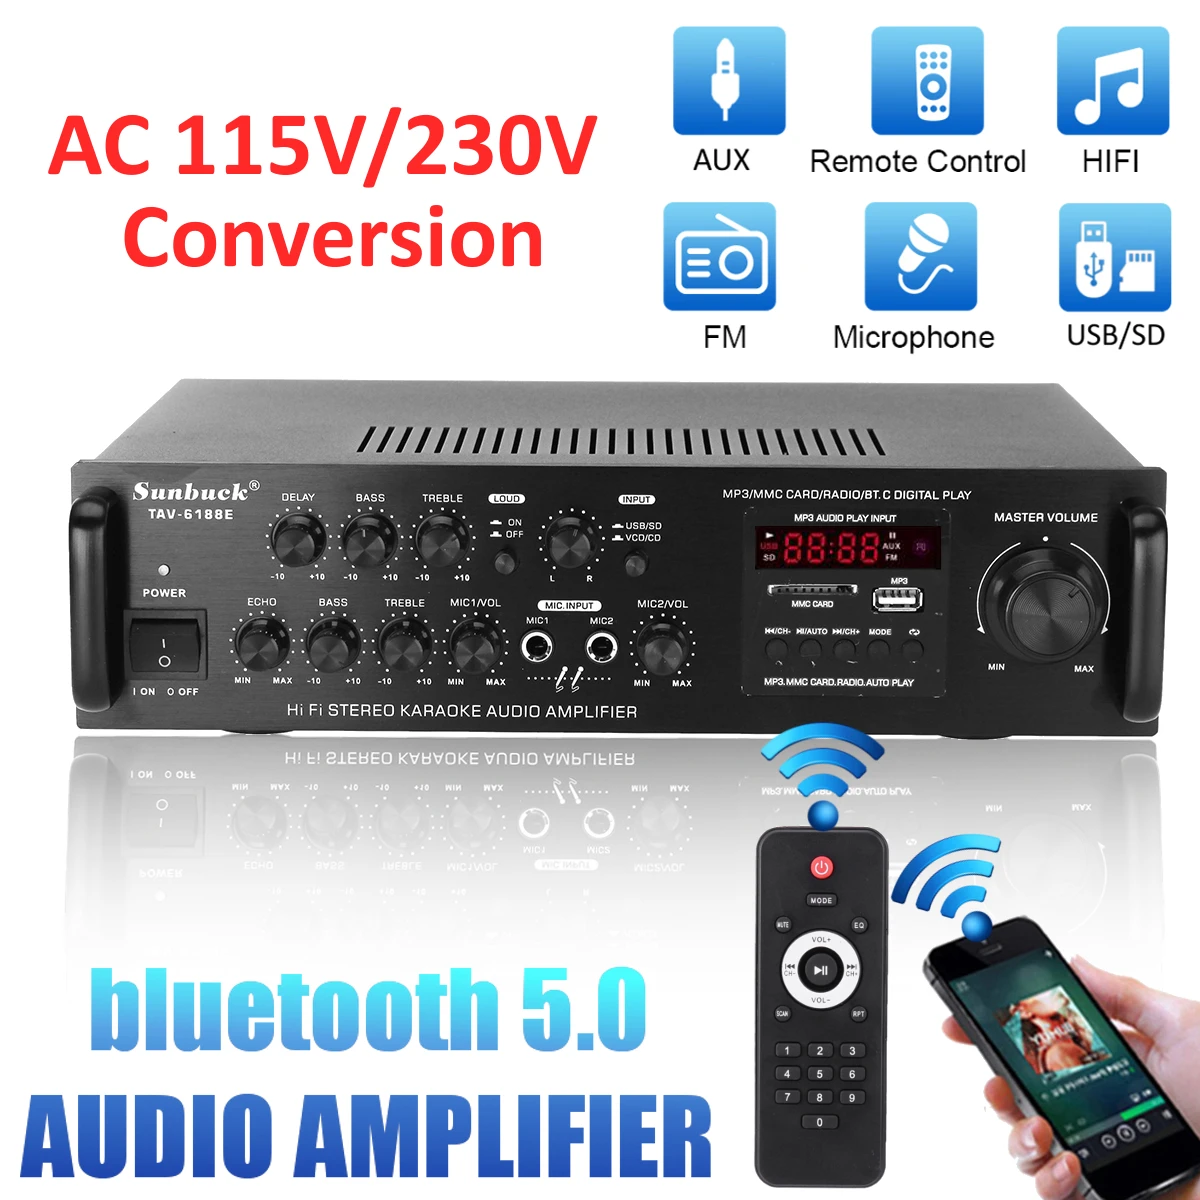 

220V 200W TAV-6188E Bluetooth5.0 Audio Amplifier EQ Stereo Home Theater AMP Car Home 5CH AUX USB FM SD - US Plug